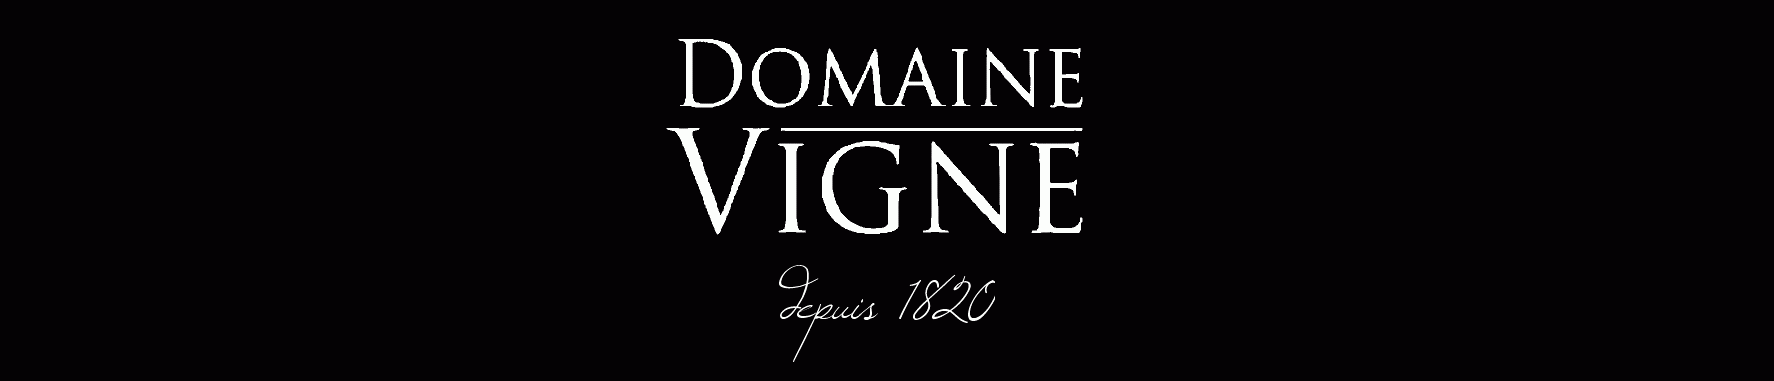 Domaine Vigne Bernard